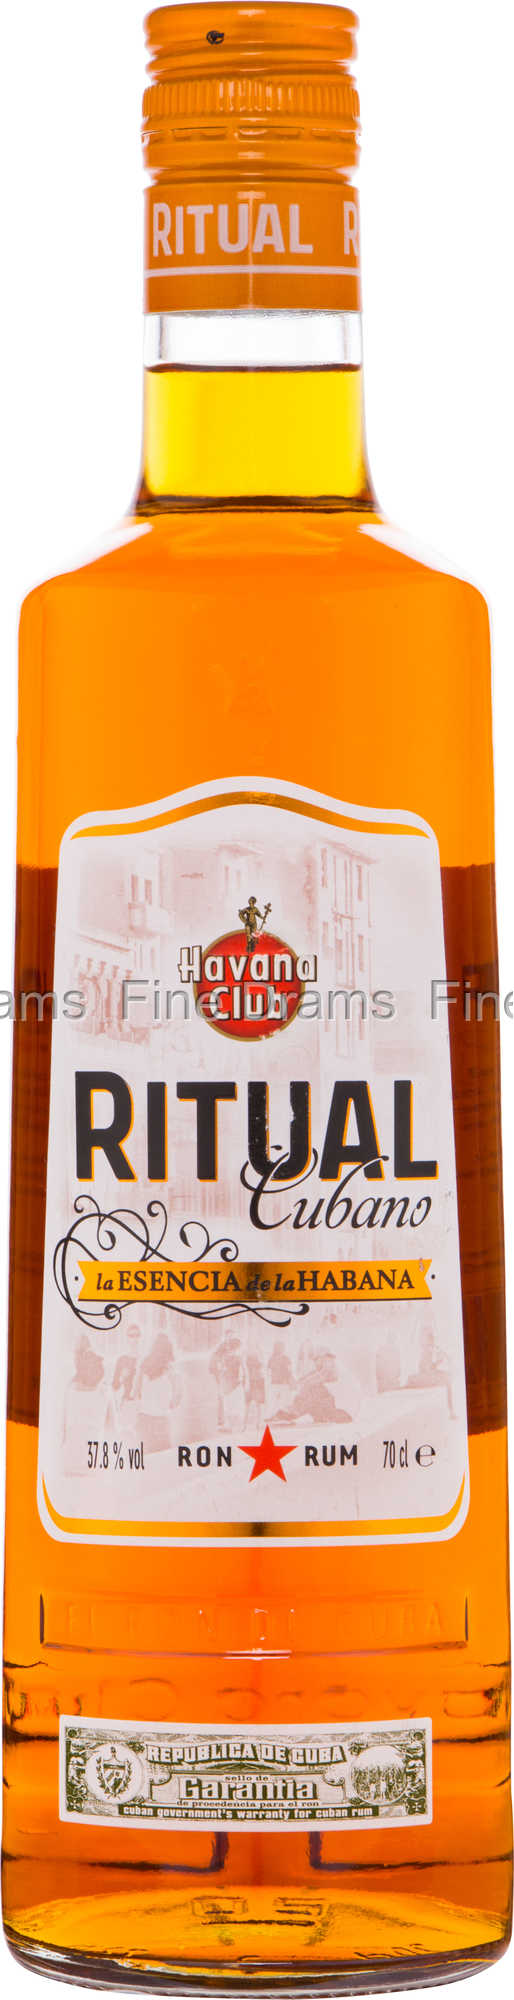 Havana Club Ritual Rum